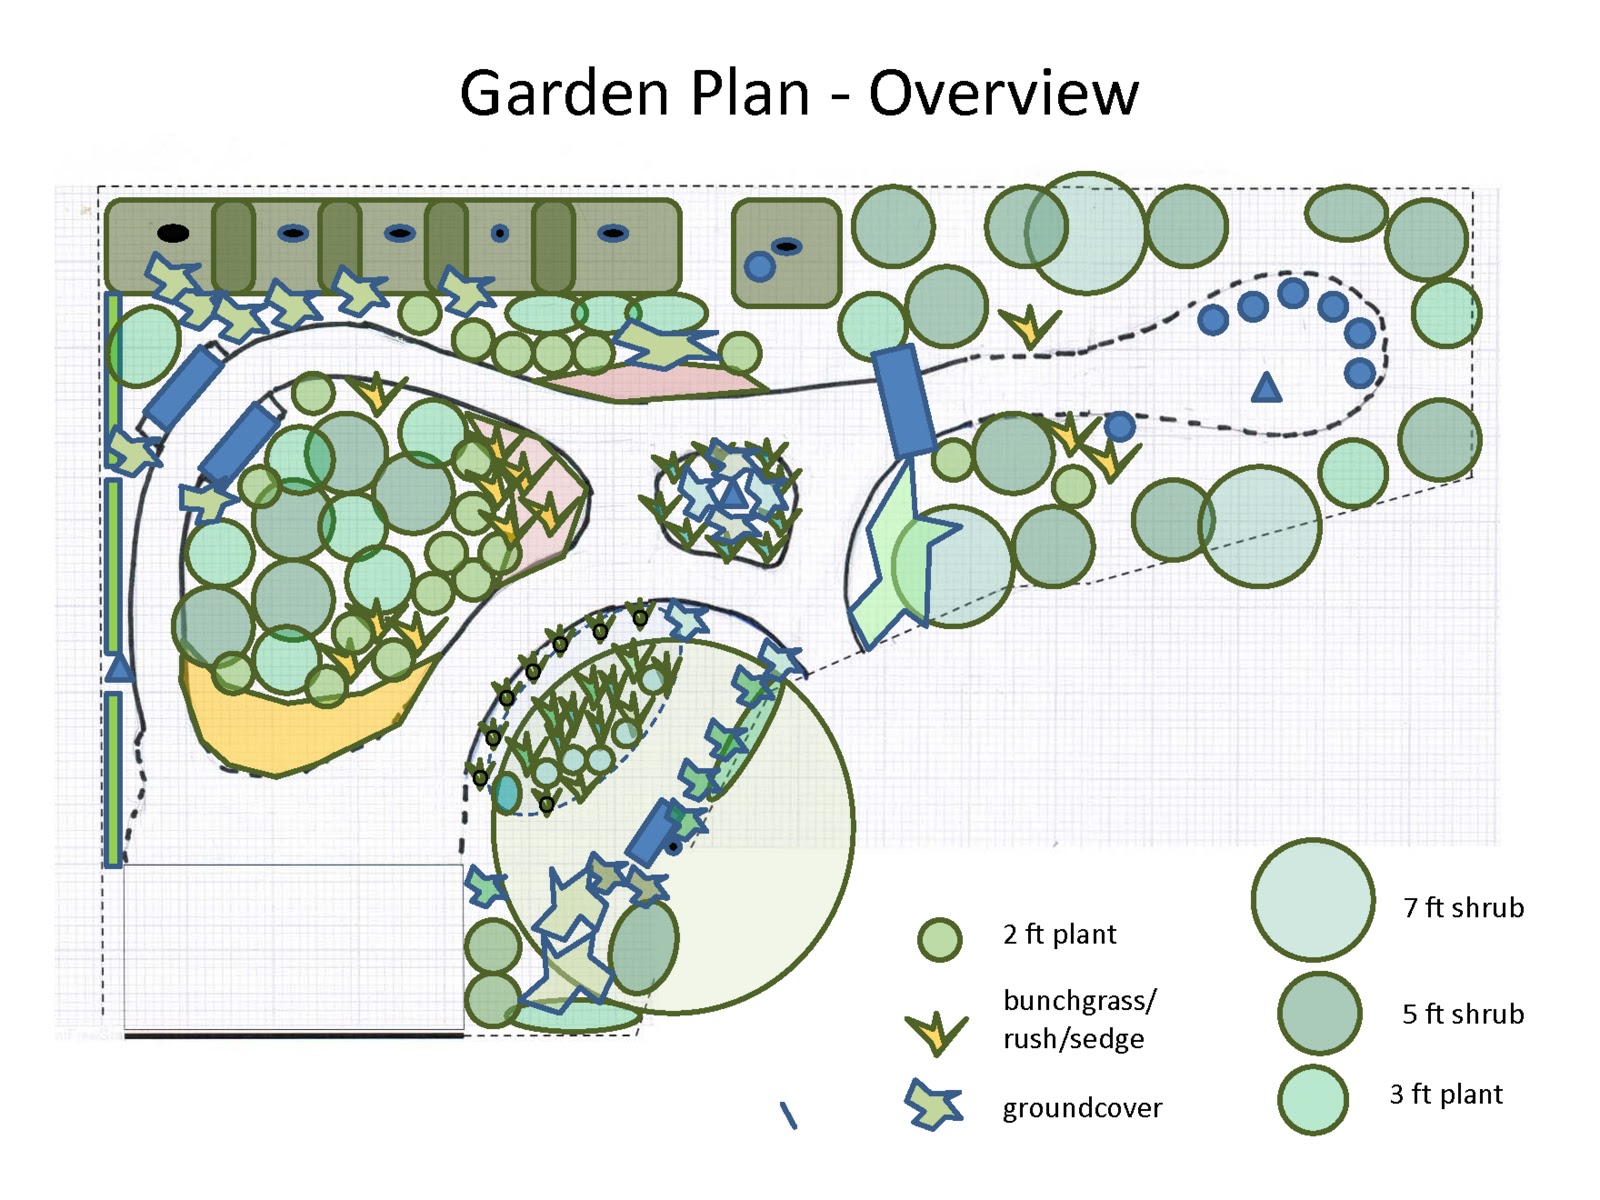 ... Nature's Backyard - A Water-wise Garden: Garden Plan - January, 2012